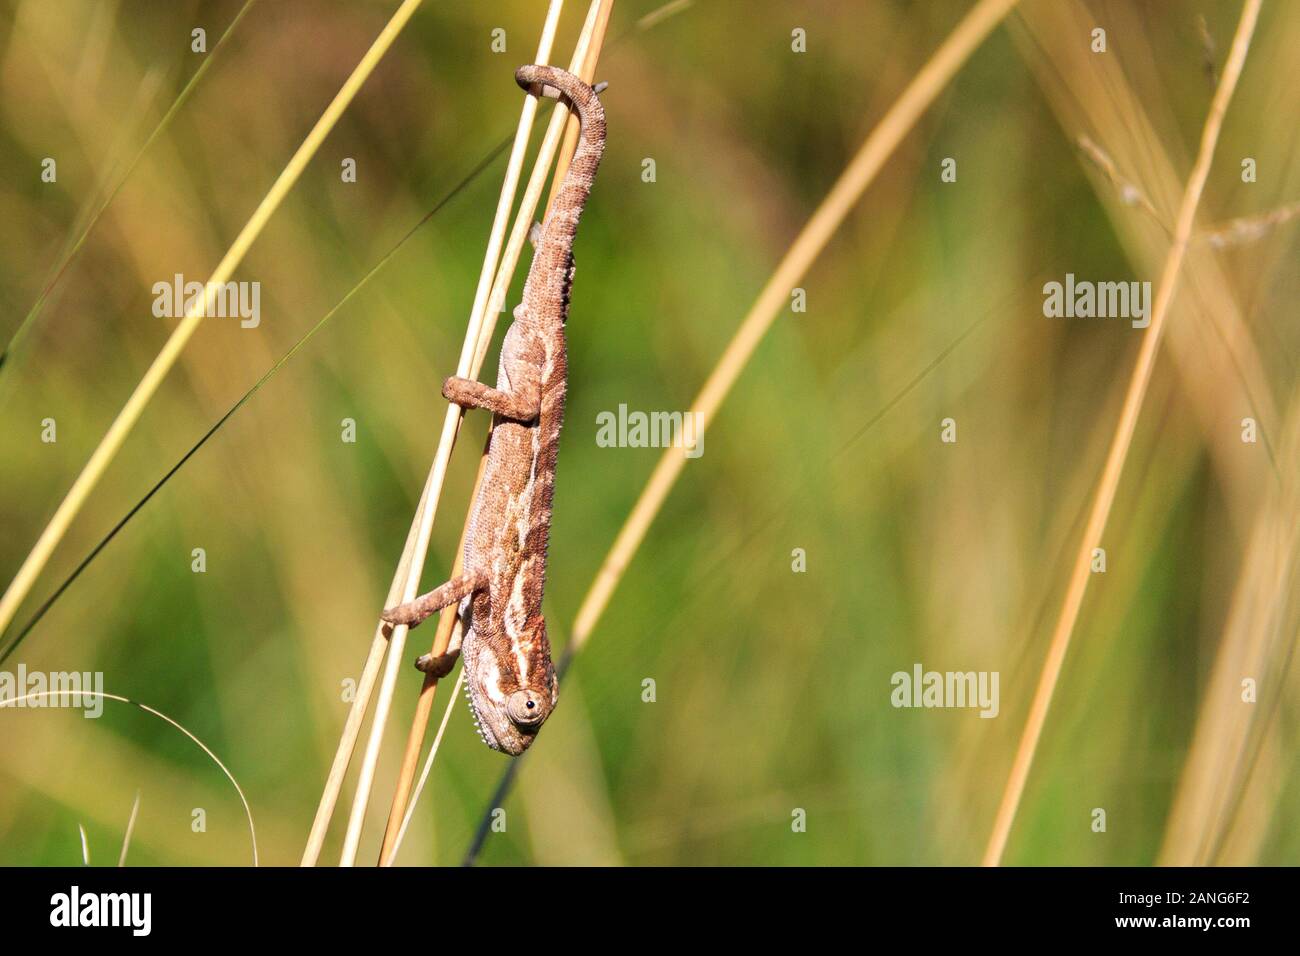 Little Brown chameleon grimper sur un brin d'herbe, Drakensberg, Afrique du Sud Banque D'Images